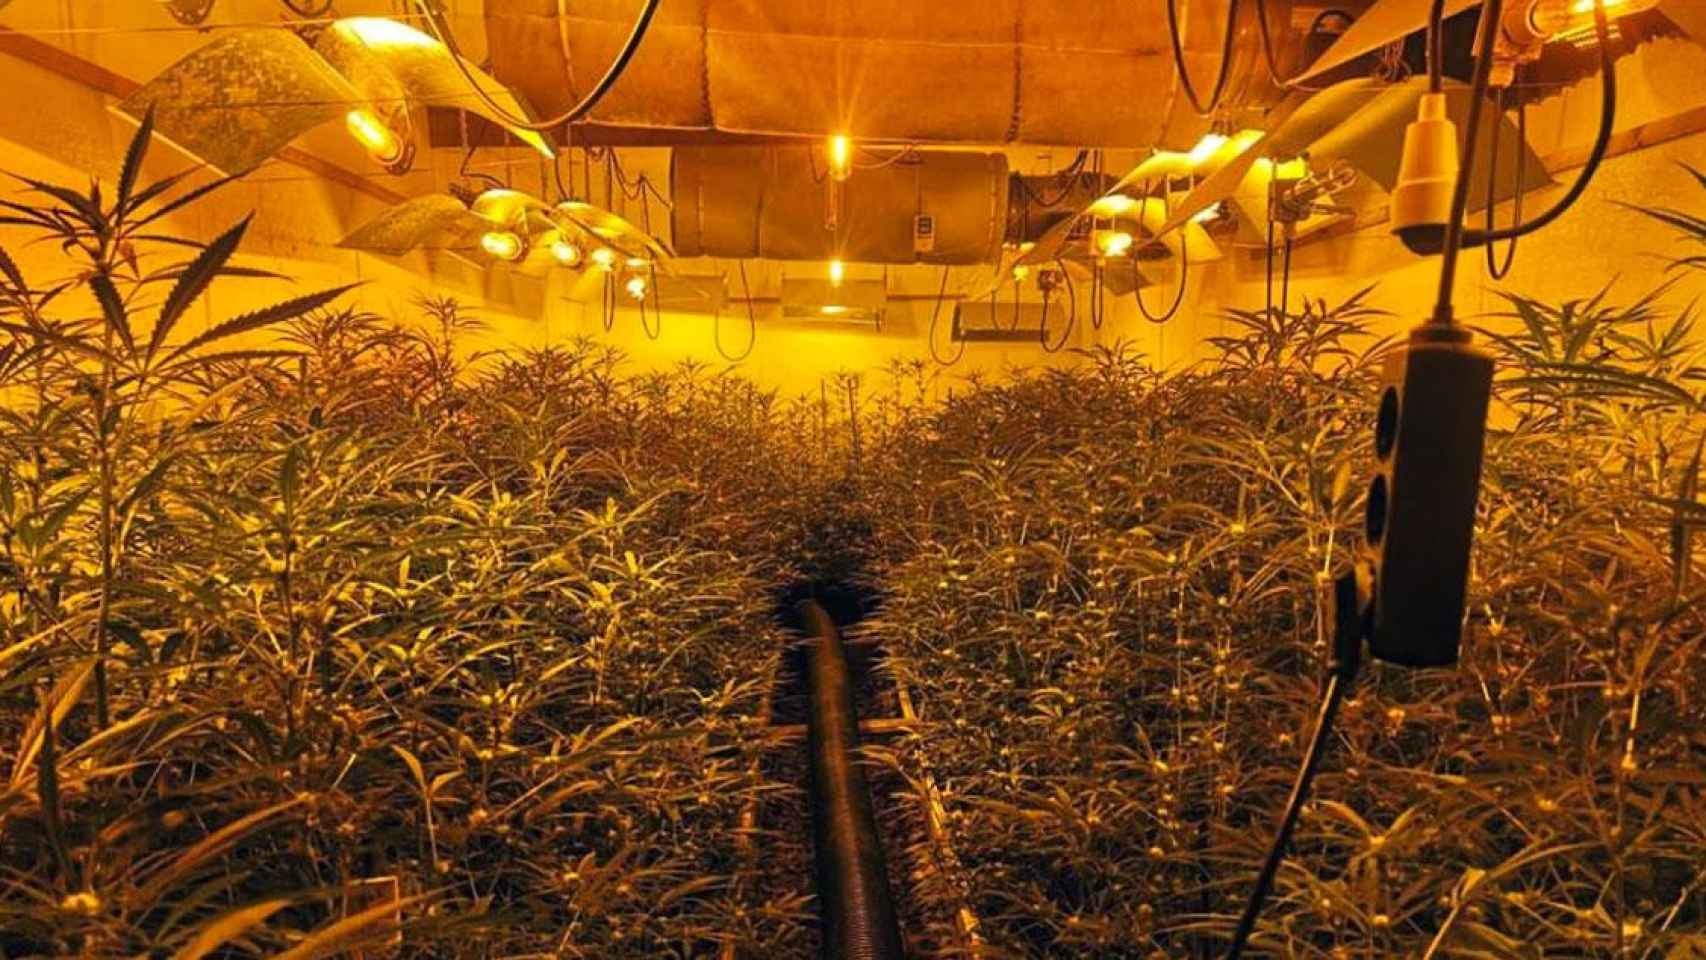 Una plantación de marihuana desarticulada / GUARDIA CIVIL